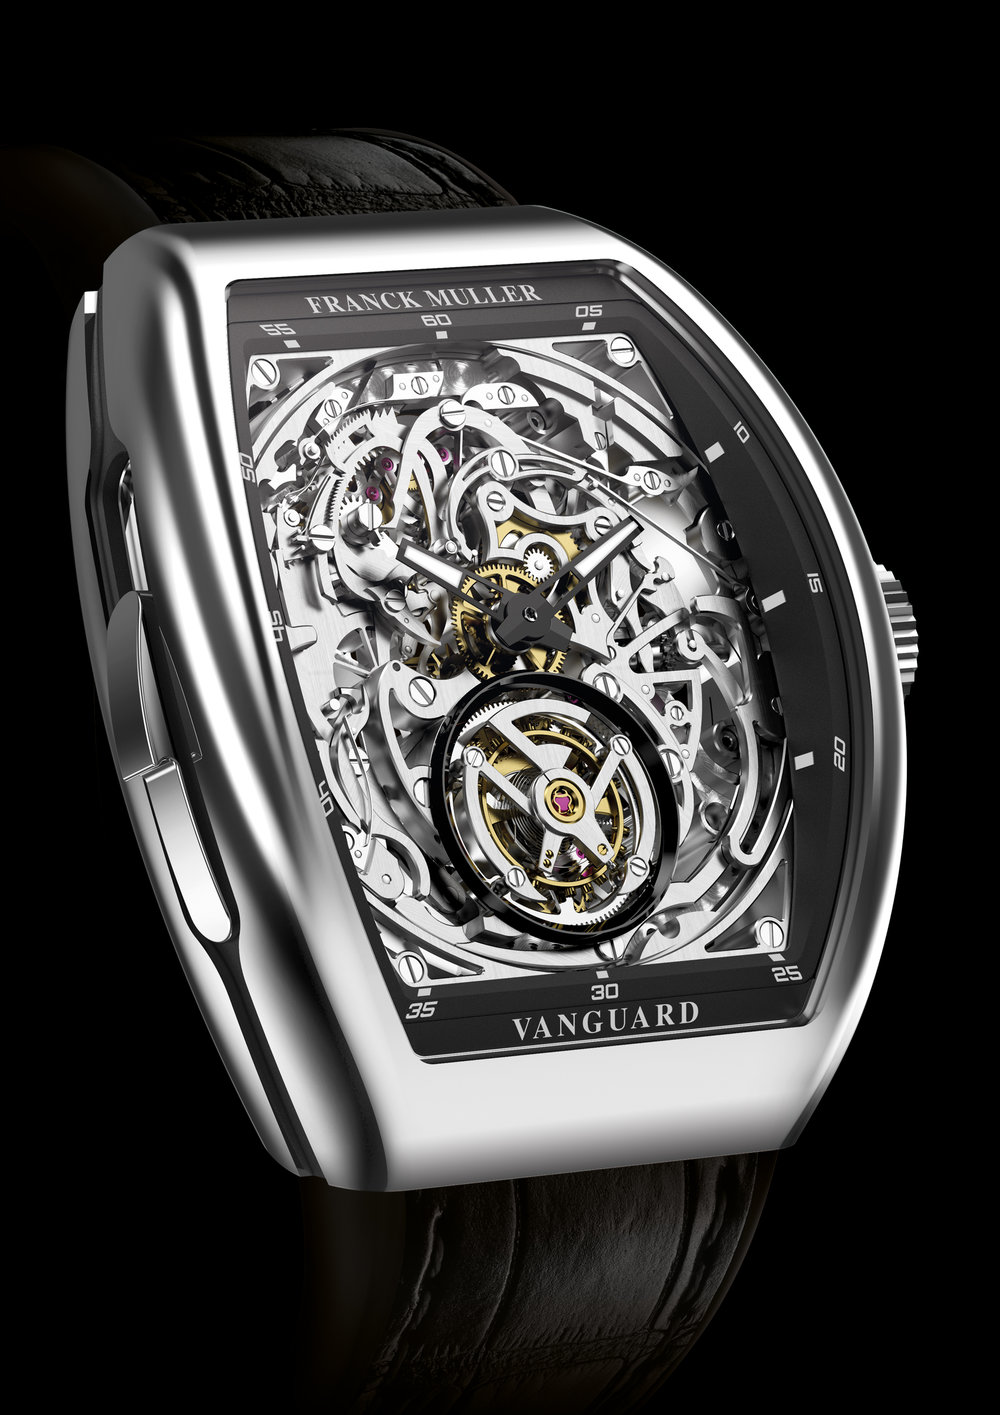 Franck Muller Vanguard Franck Muller Vanguard (V 45 SC DT)Franck Muller Transamerica Stainless Steel 40mm watch